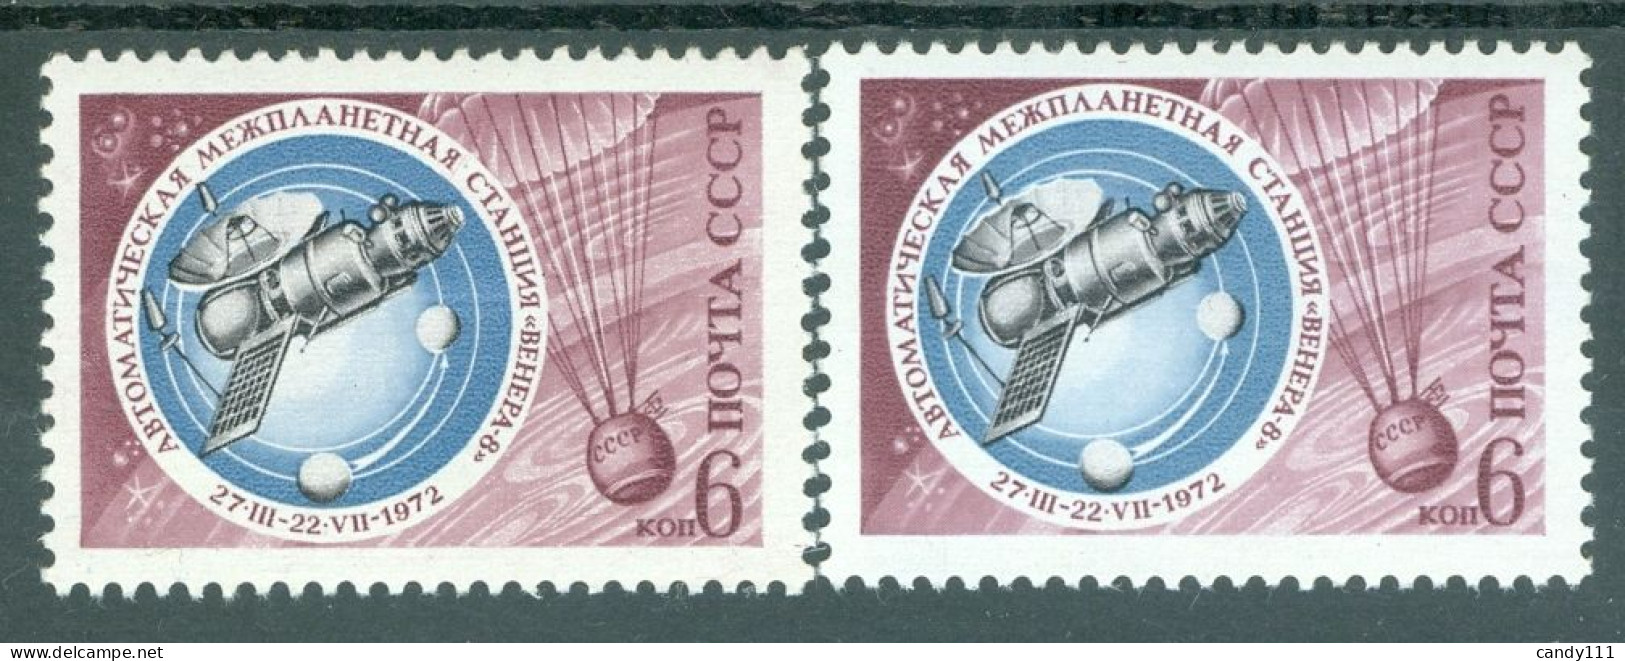 1972 Space,Venus/Venera 8,probe/robotic Spacecraft,Russia,4079,Gum Variety,MNH - Europe